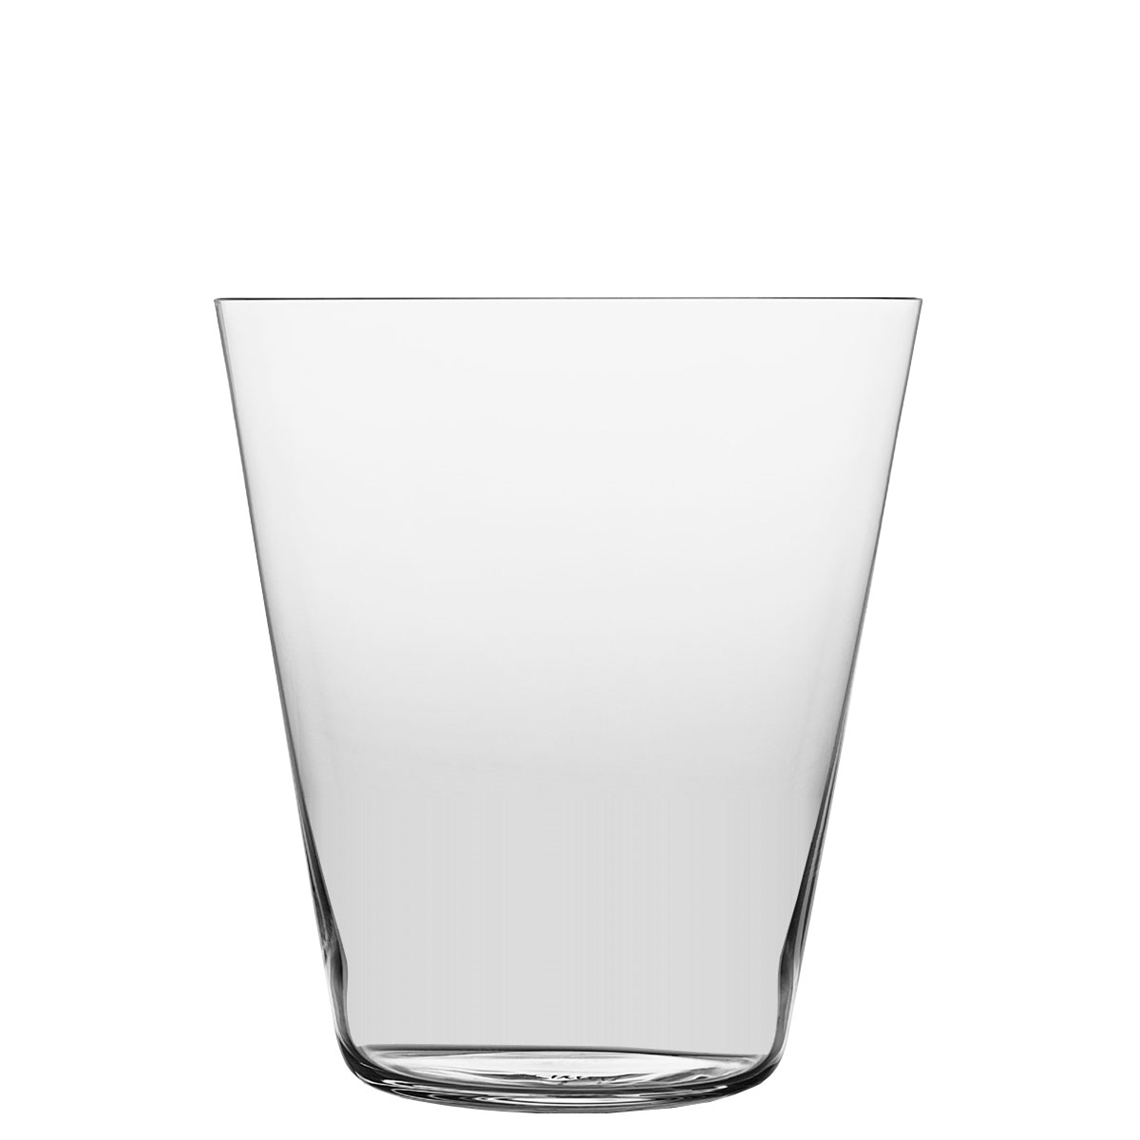 Zalto Denk Art Stemless Coupe Water Glass - Set of 6